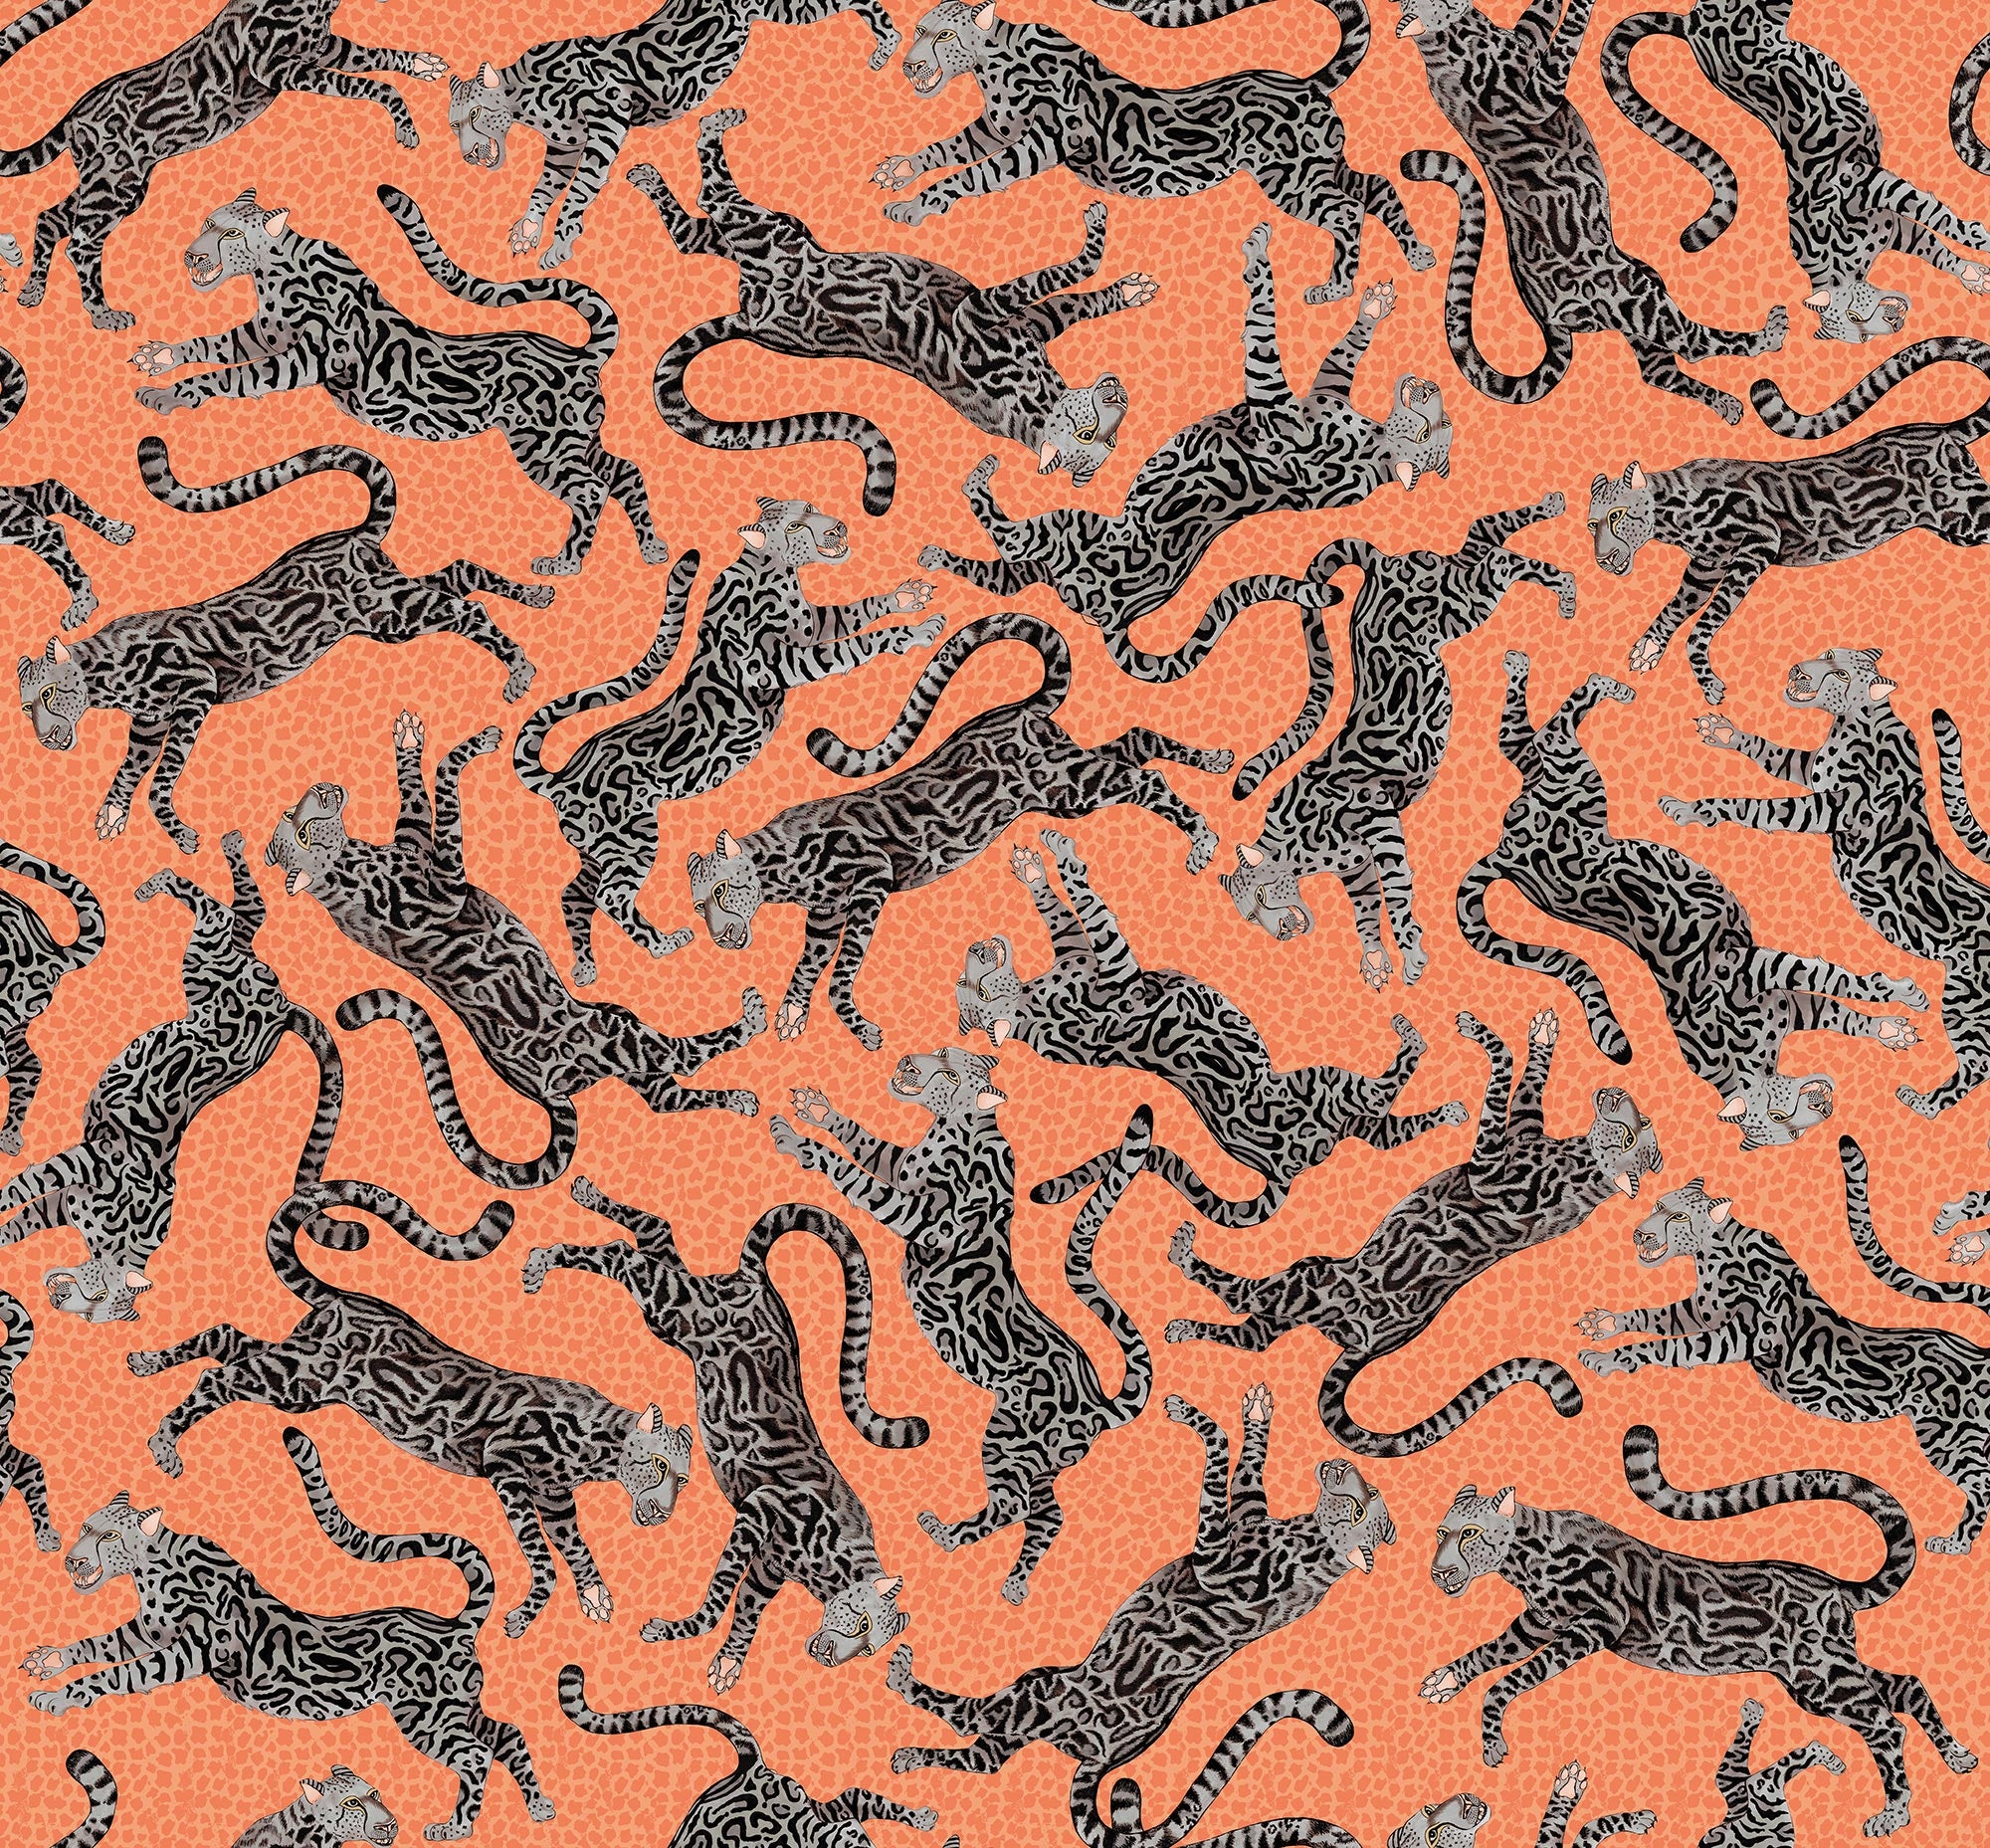 Cheetah Kings Fabric - Linen - Coral